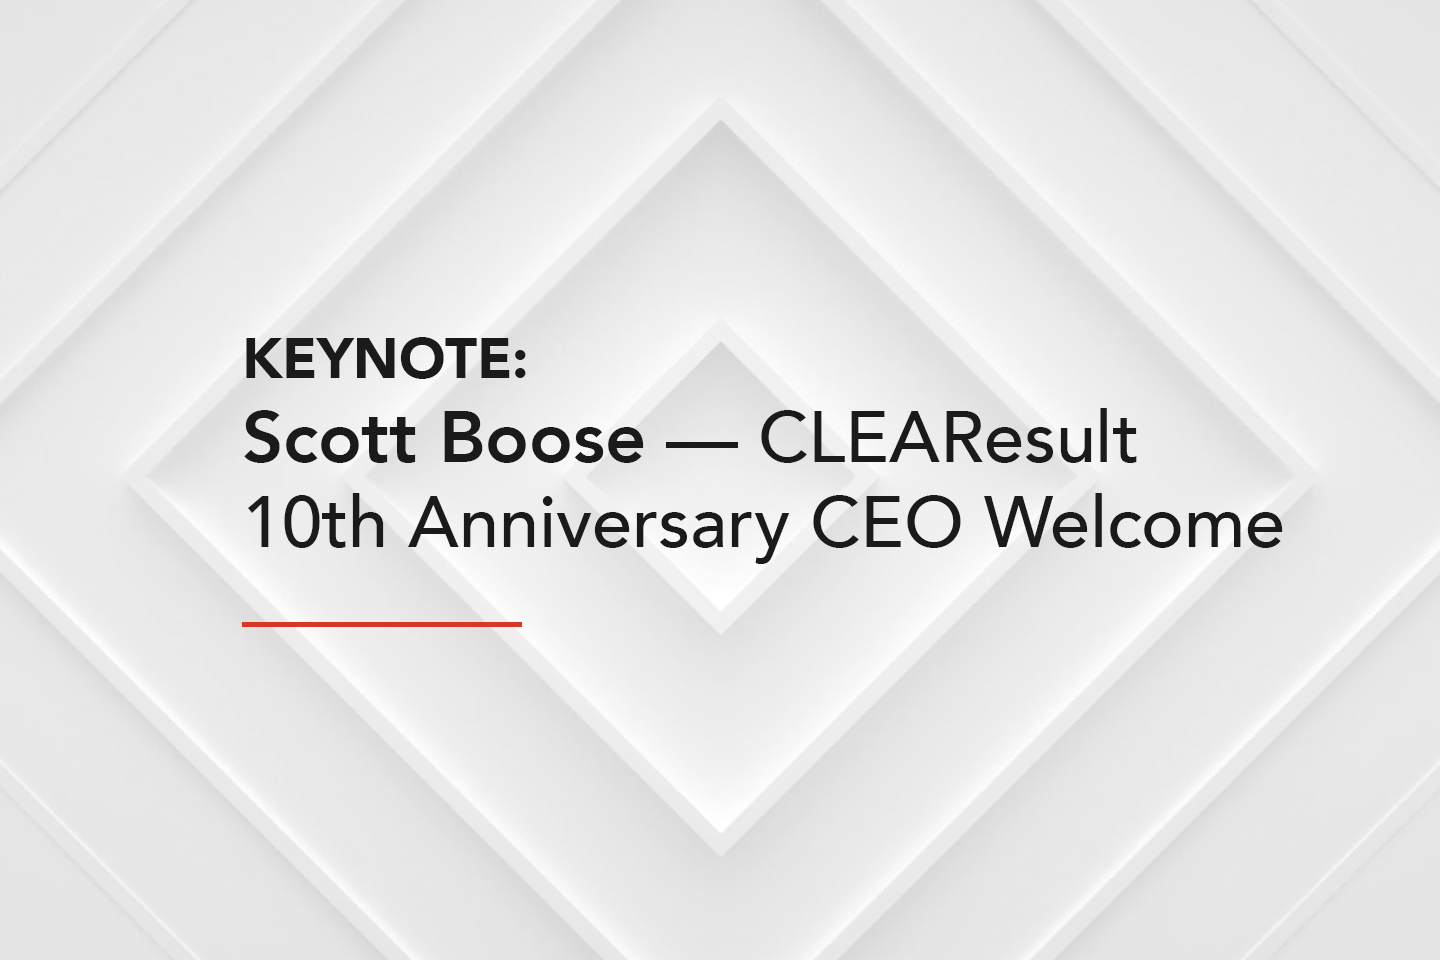 Keynote CEO Scott